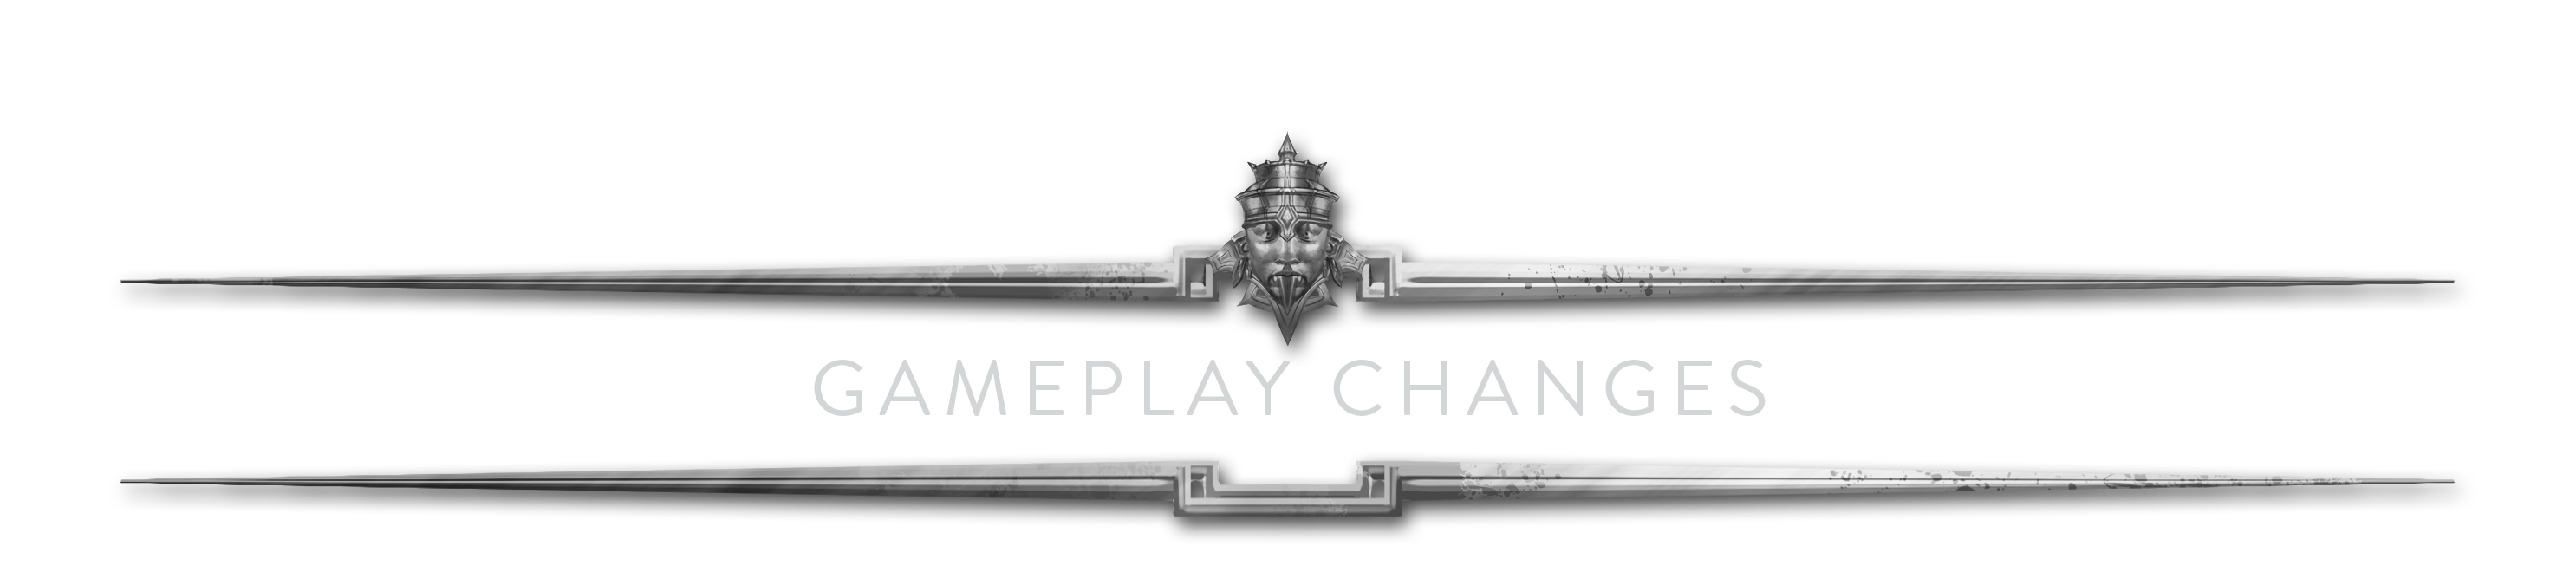 header_gameplay_changes_new